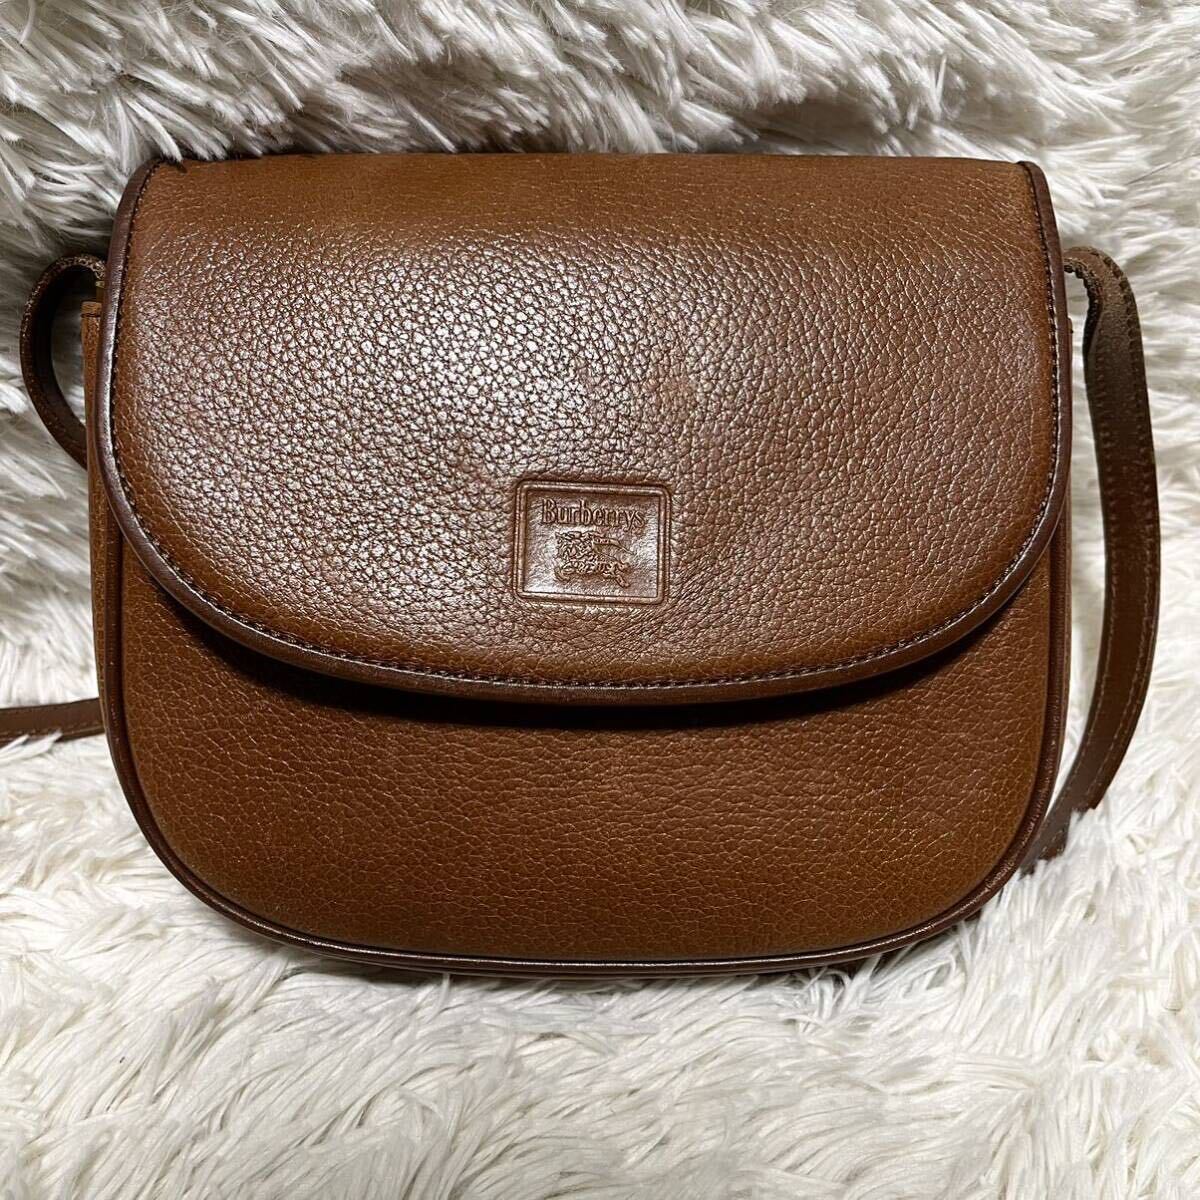 Burberry Burberry shoulder bag leather original leather diagonal ..noba check wrinkle leather flap Vintage magnet type Brown tea color 